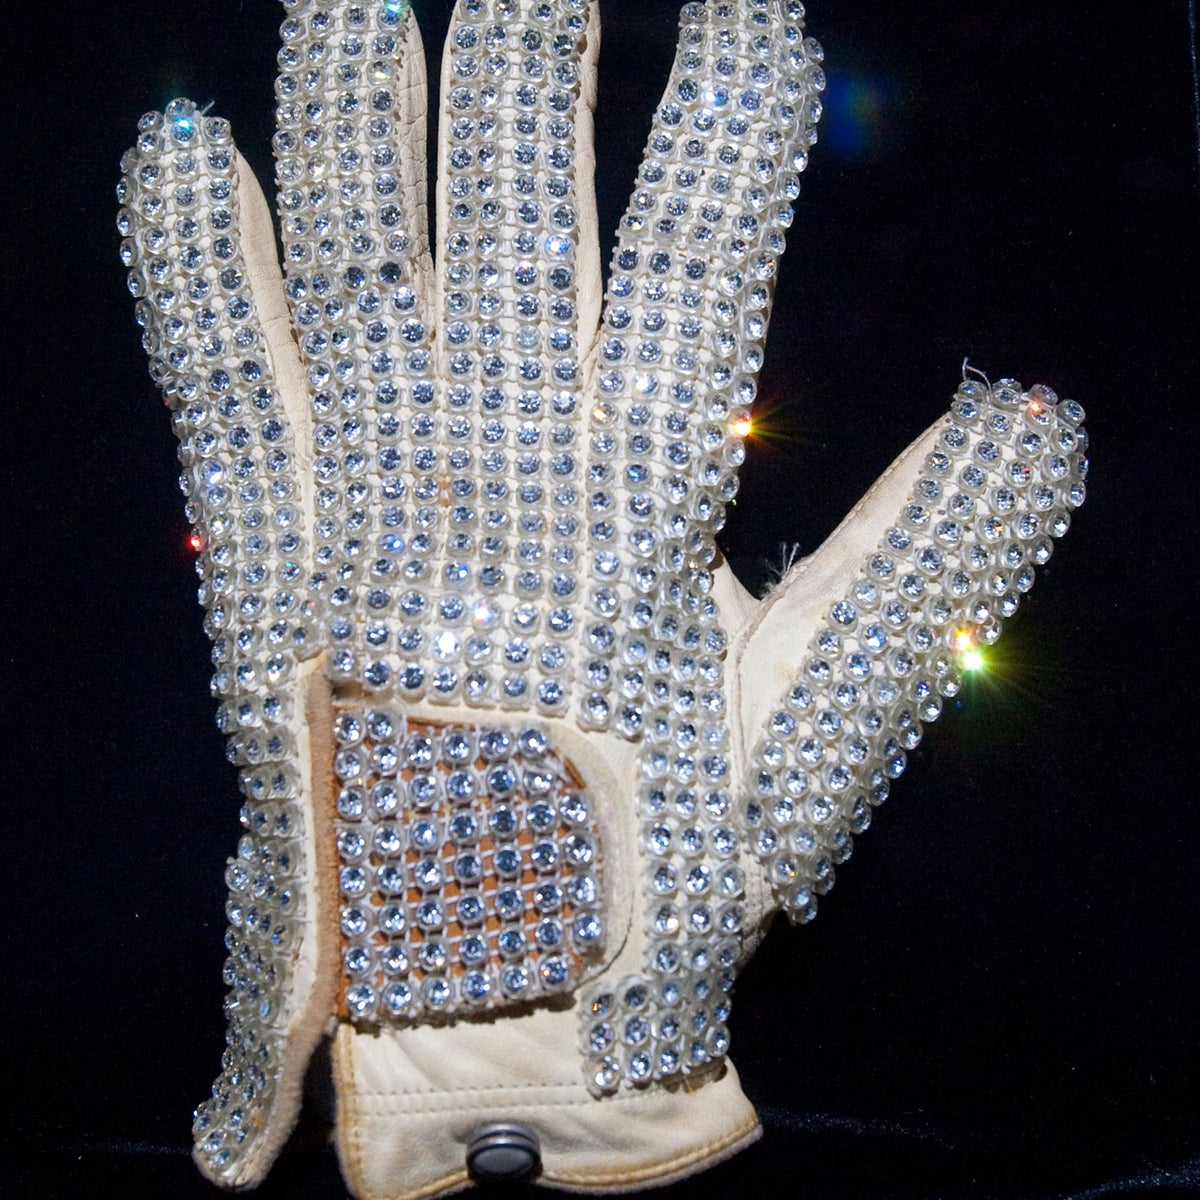 Michael Jackson's white glove: Rhodri Marsden's Interesting